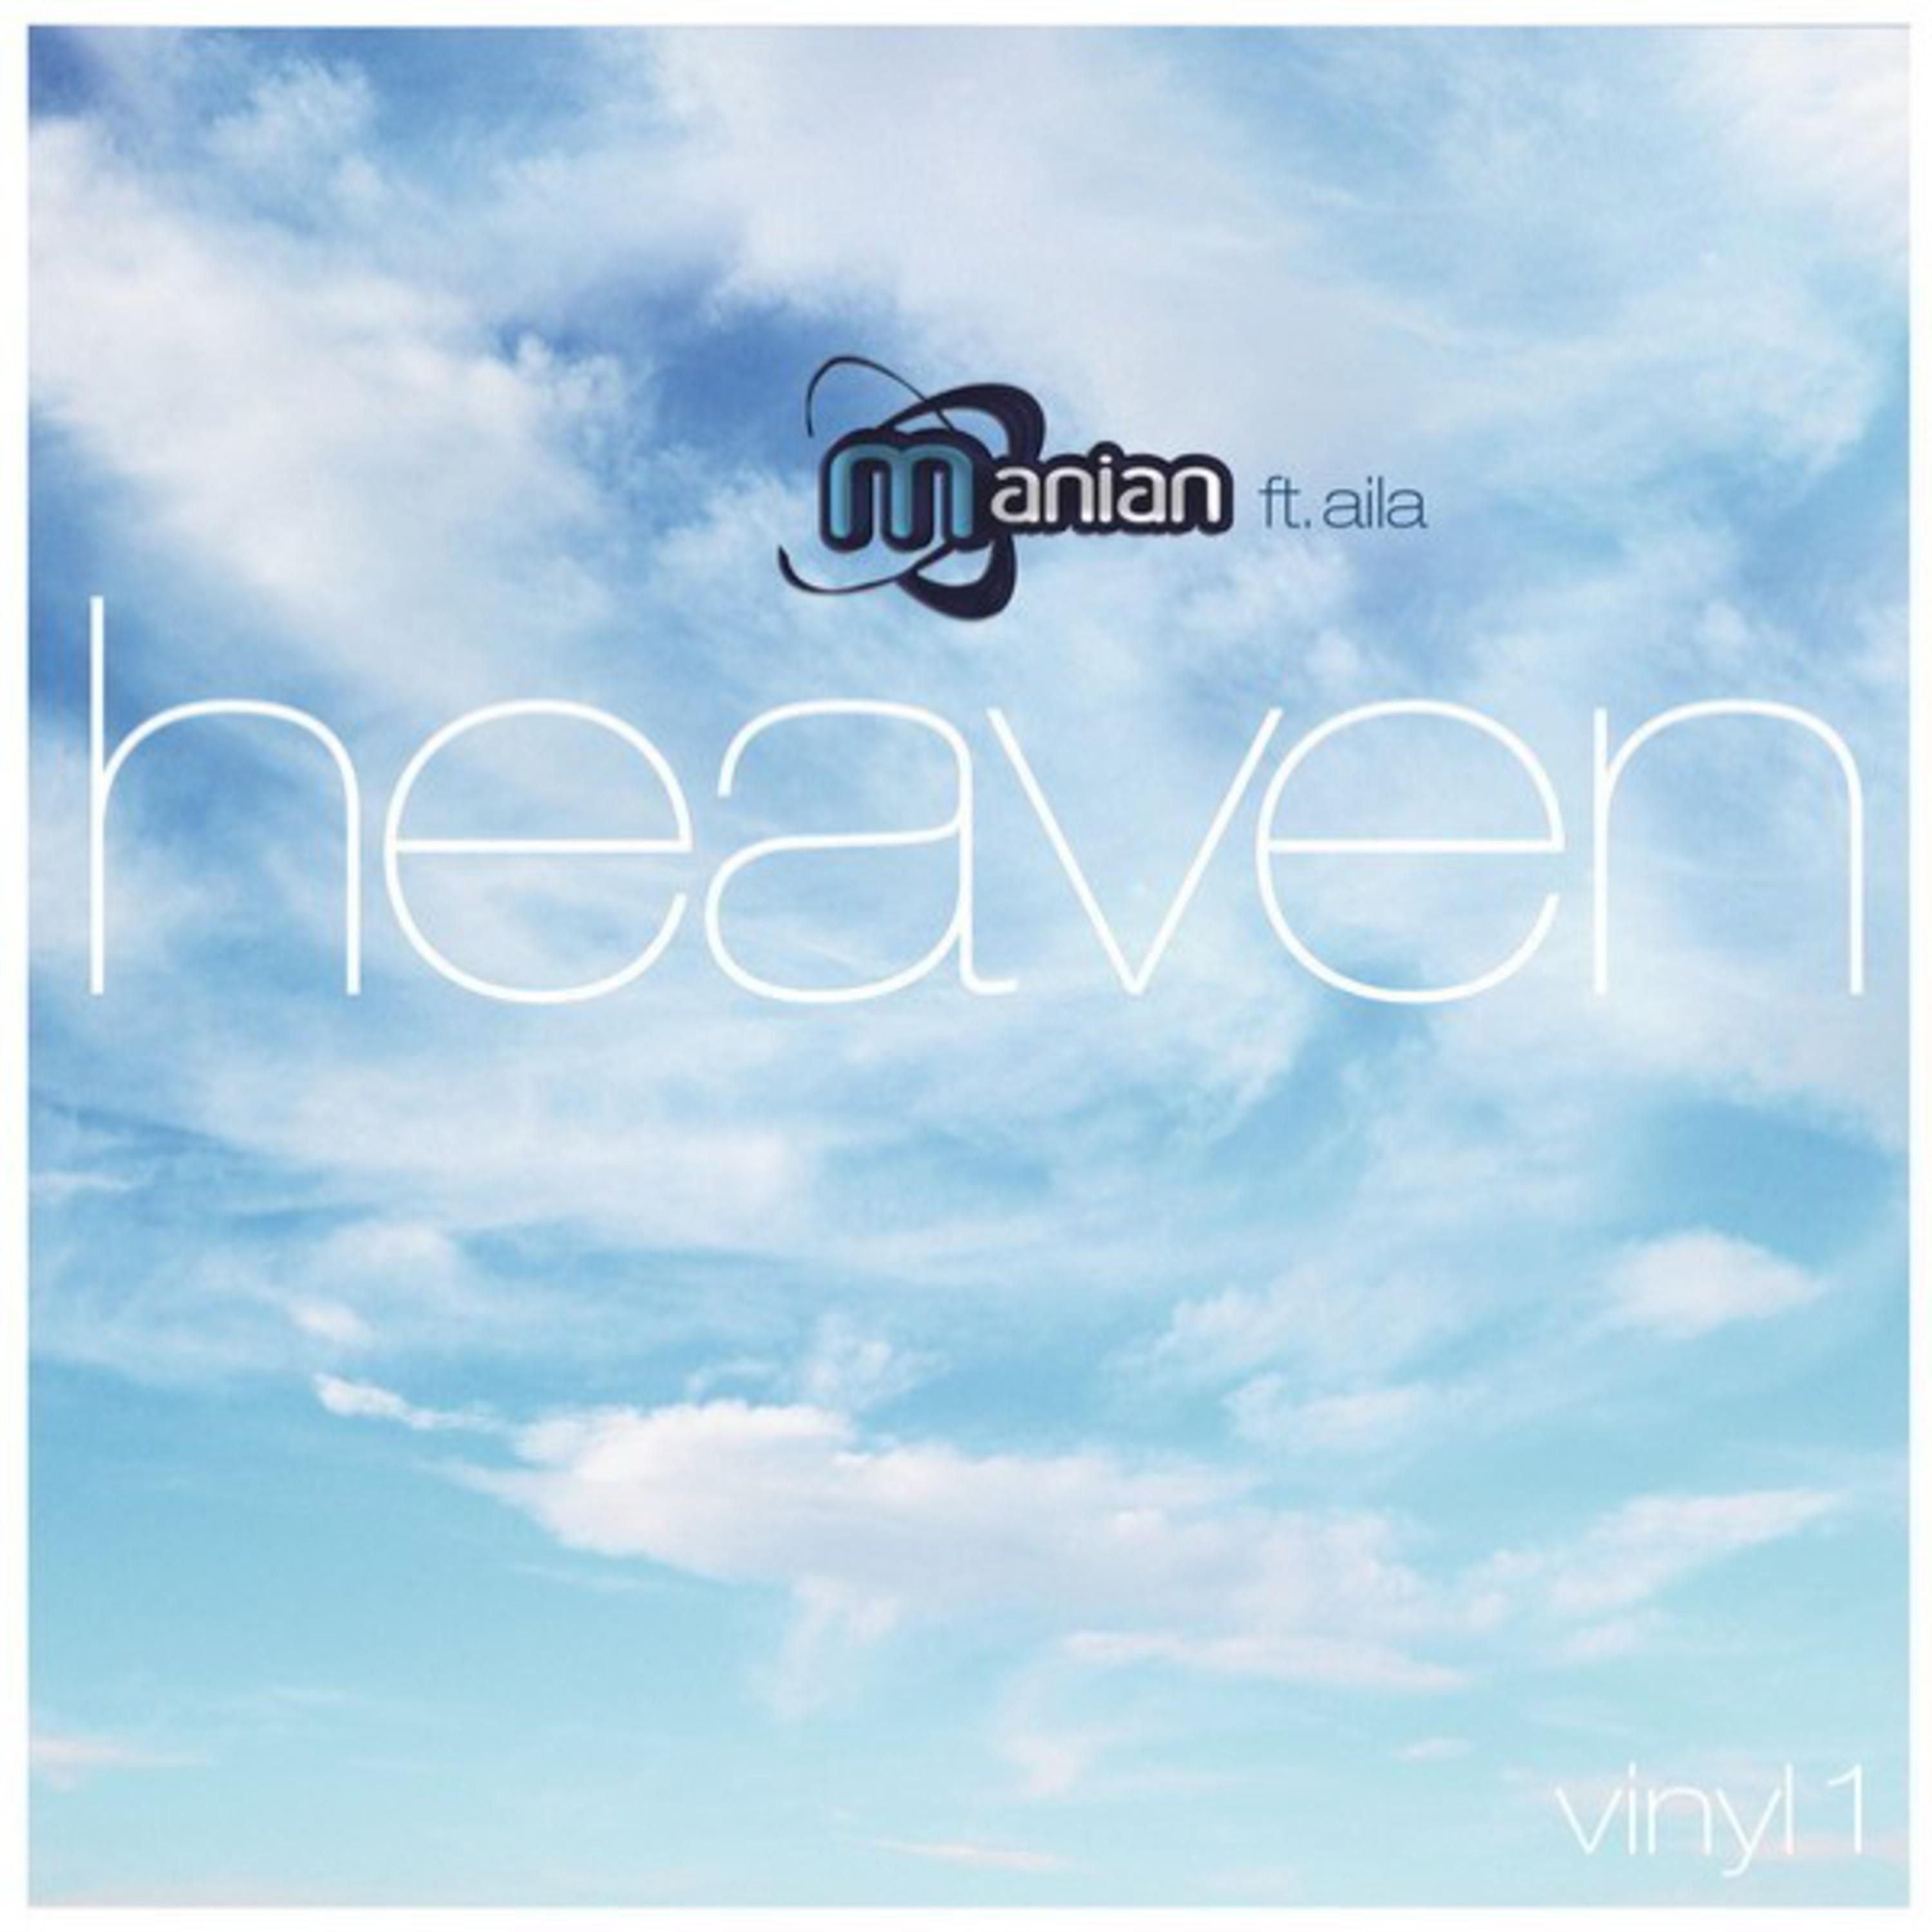 Heaven (Kareema Remix)